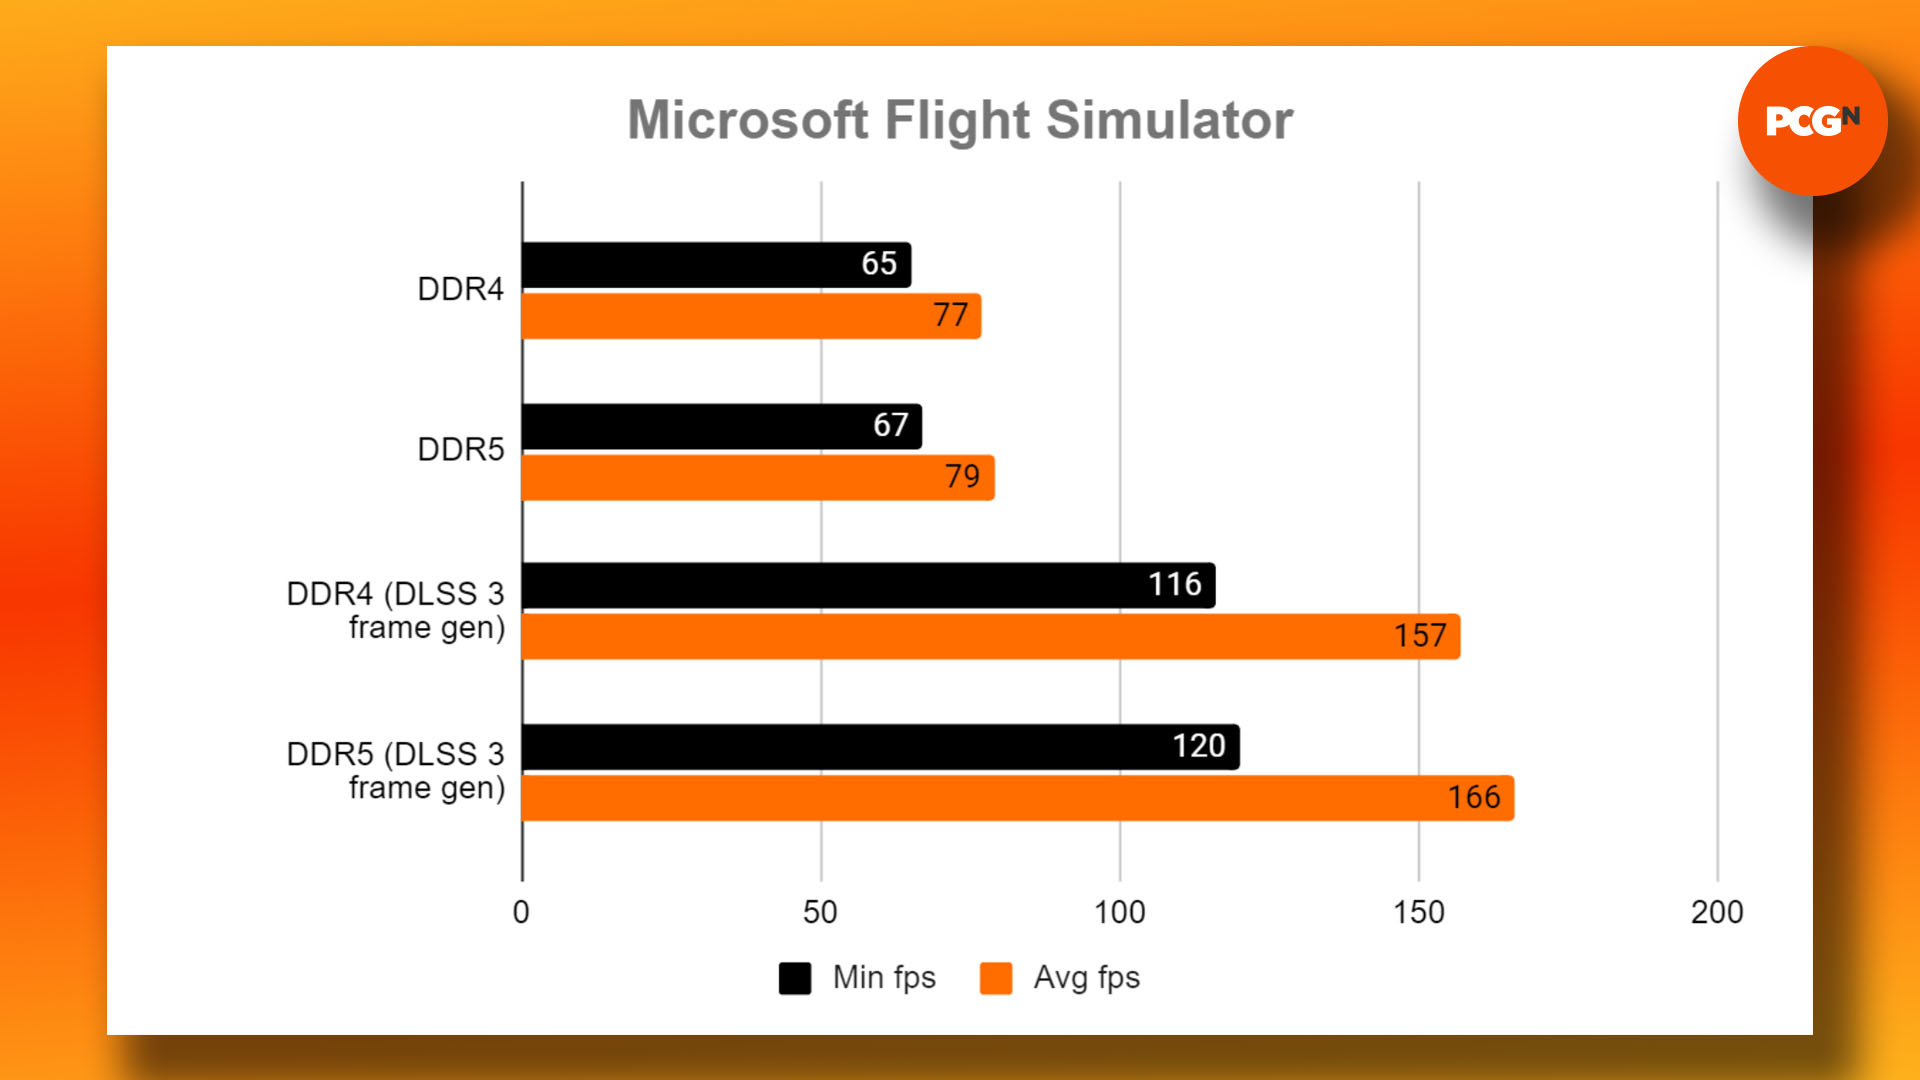 DDR4 vs DDR5 - which RAM to buy for gaming: Microsoft Flight Simulator